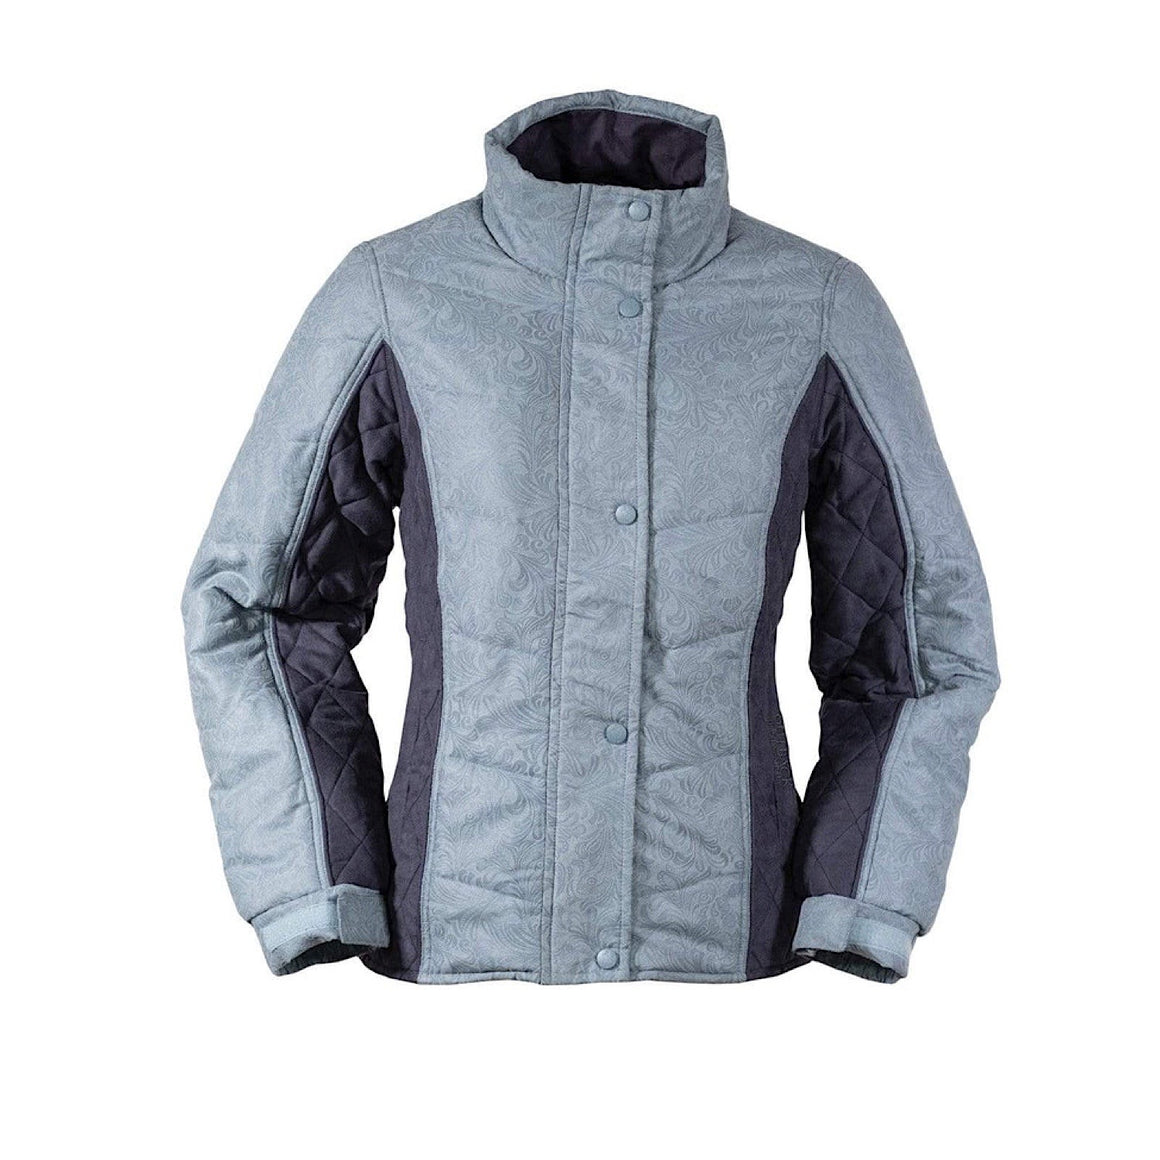 Champlain leather jacket Size 38/40 Vermont see measurements Unisex | eBay